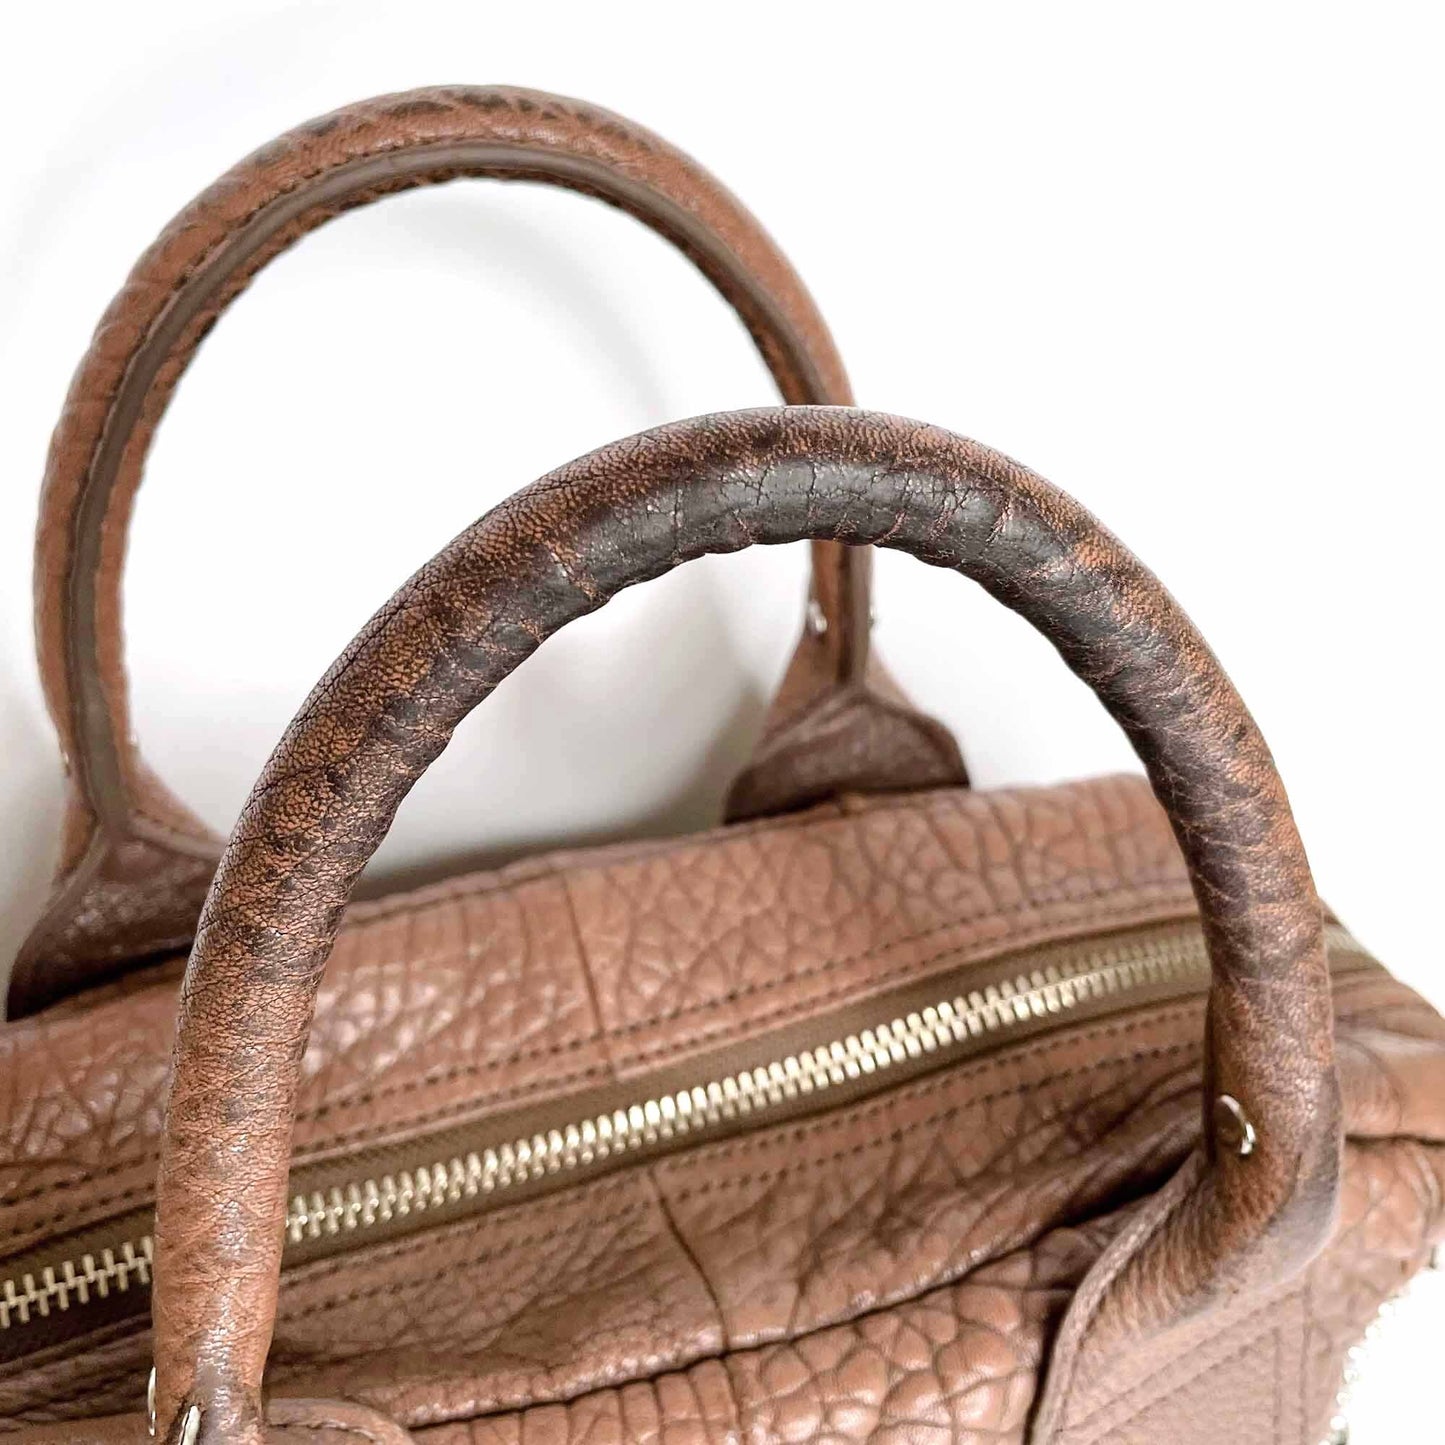 badgley mischka pebbled leather handbag with chain strap